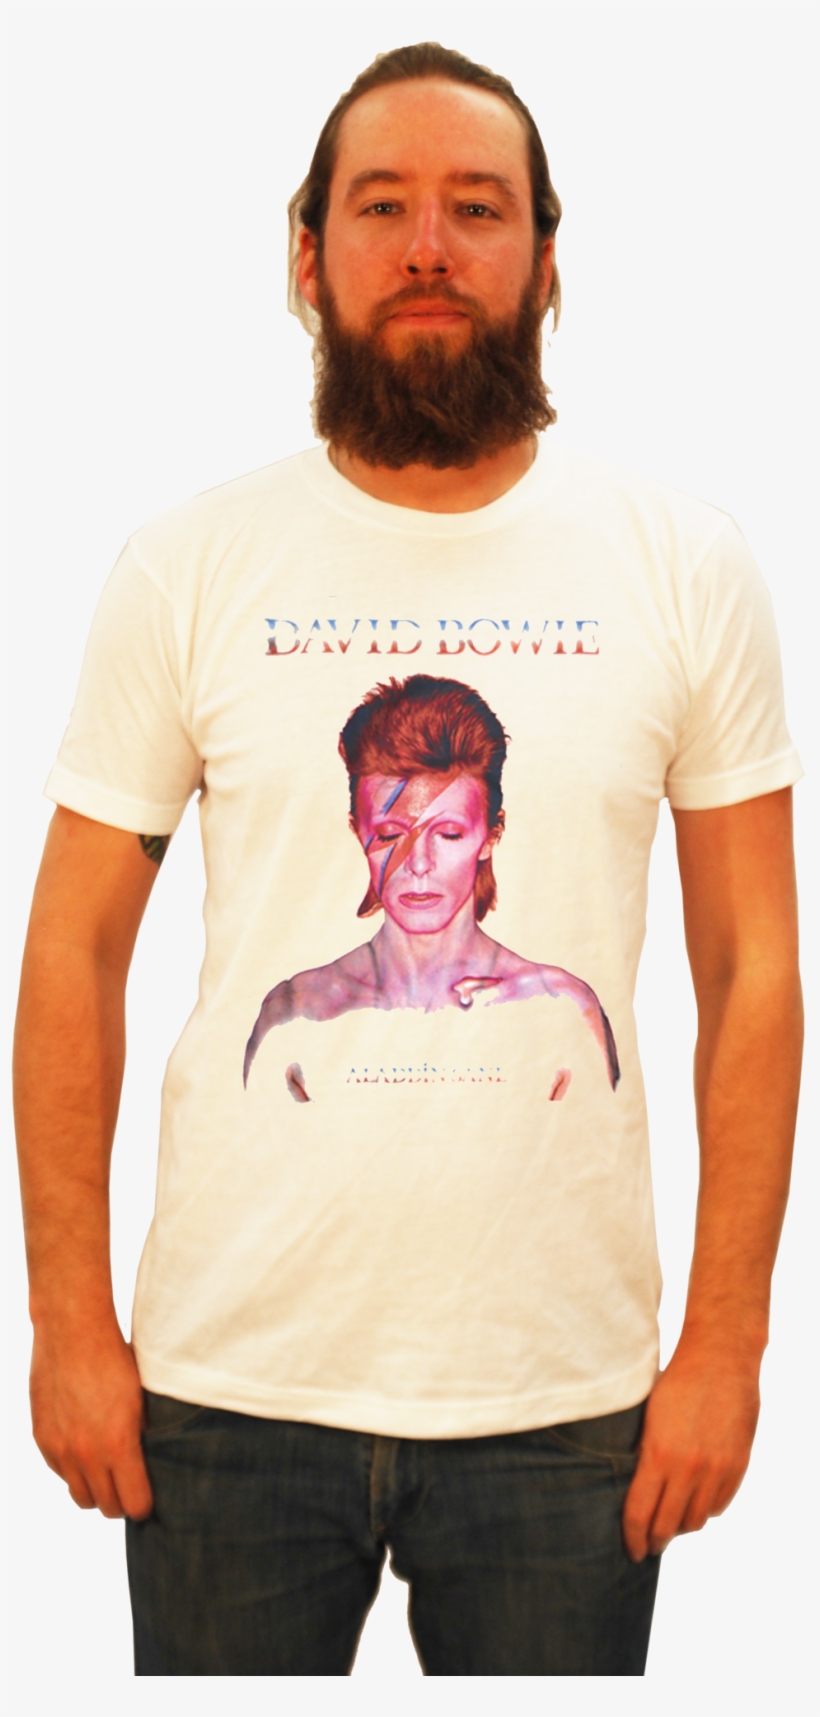 David Bowie "aladdin Sane" T-shirt - David Bowie Aladdin Sane, transparent png #8443017